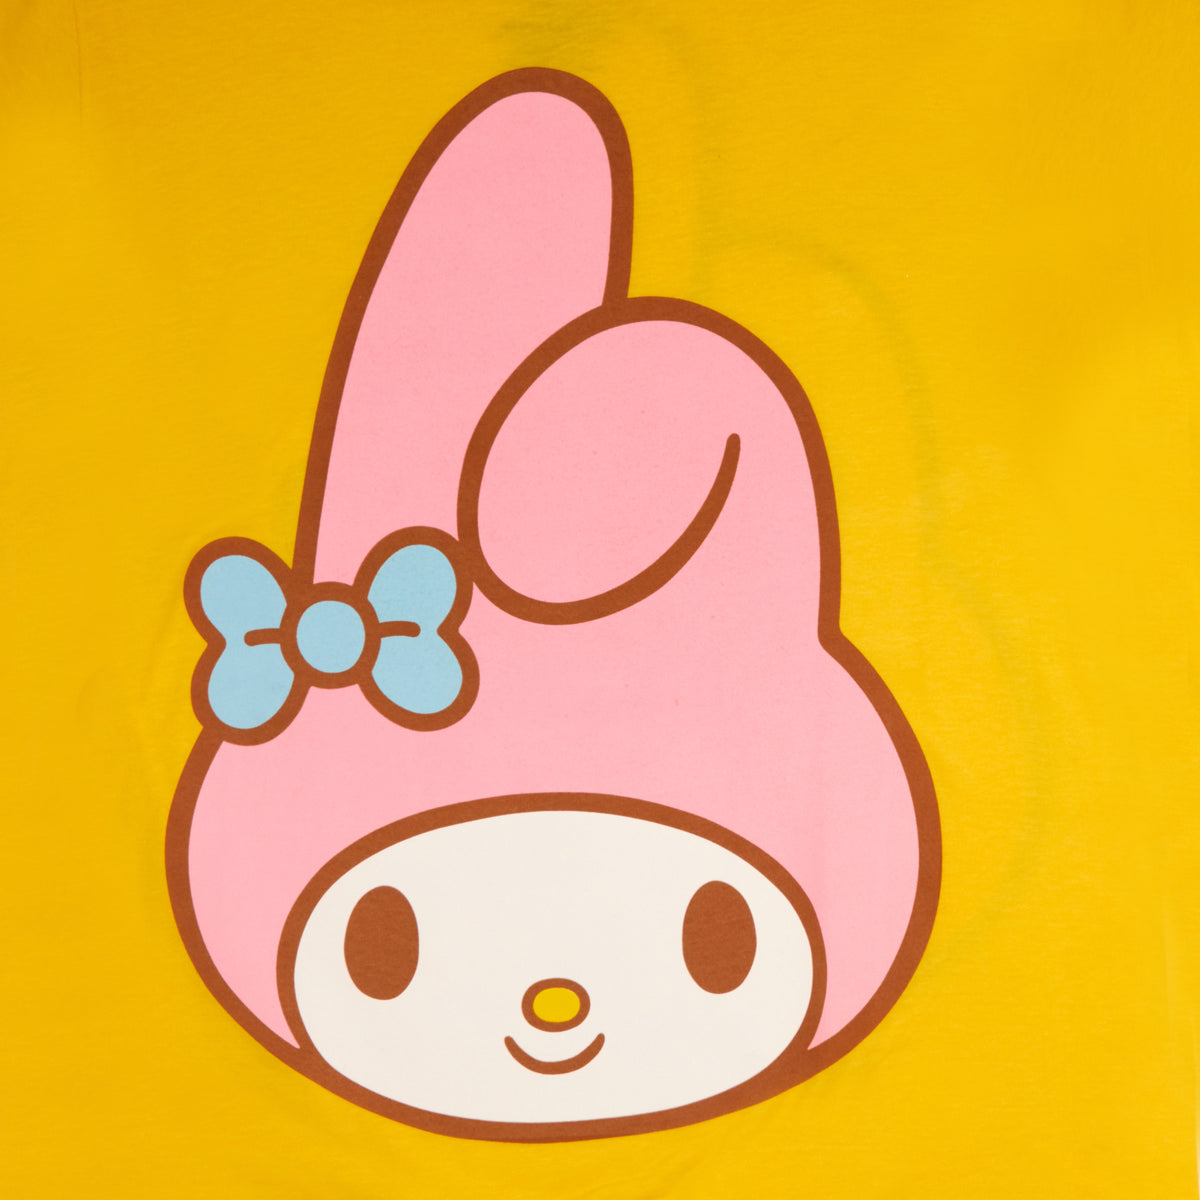  UDF Sanrio - Hello Kitty - Characters #1 My Melody